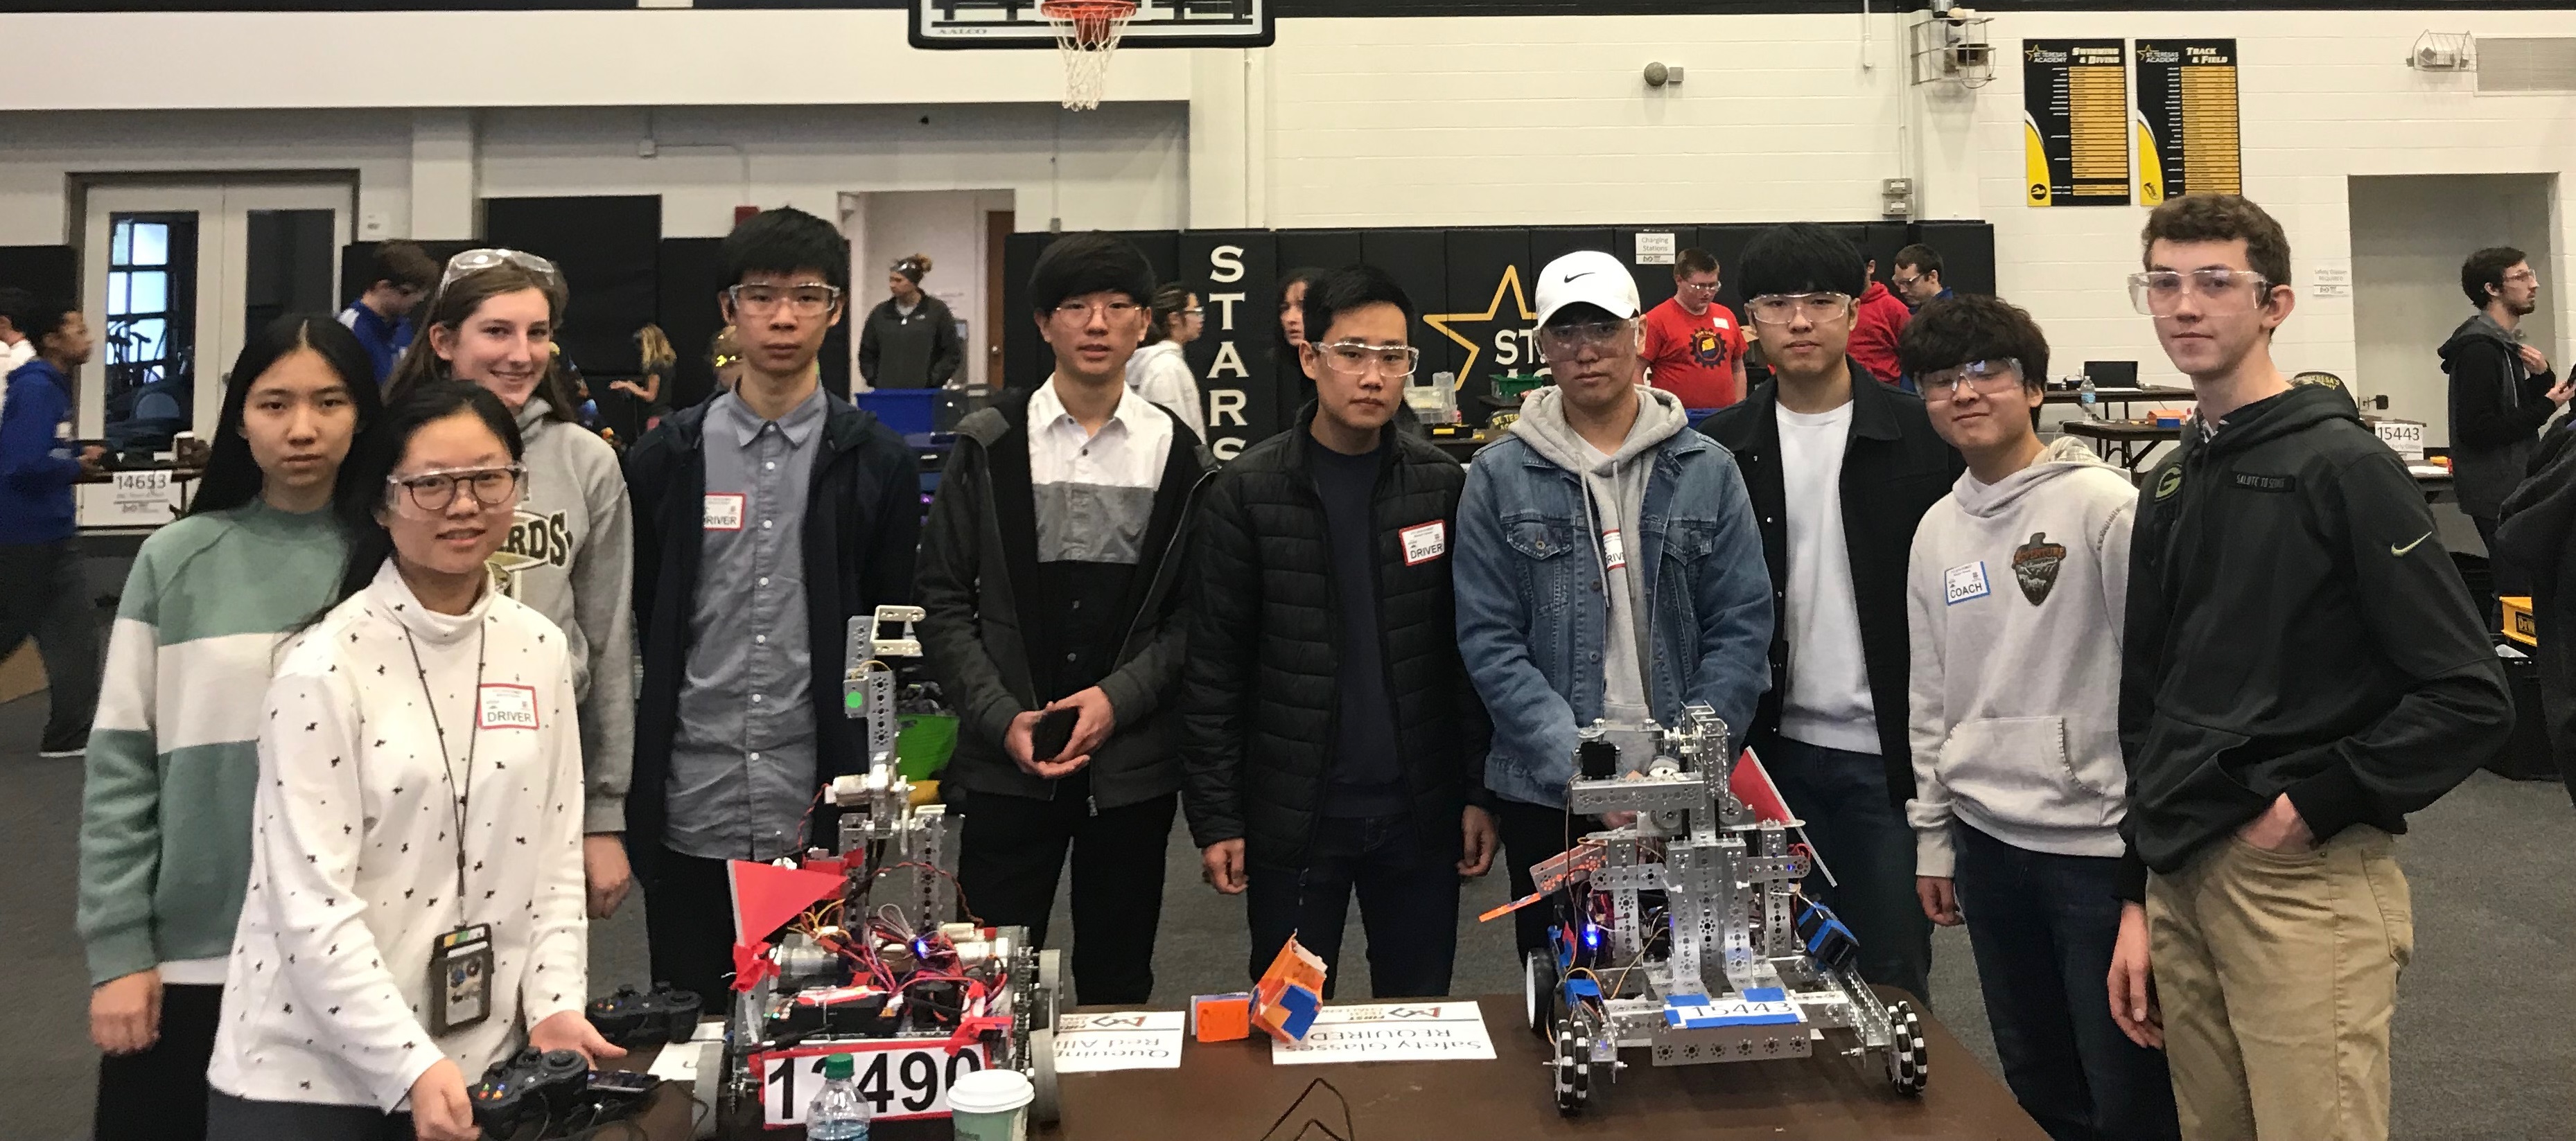 KAMS/AMS robotics team earns 2nd place at tournament